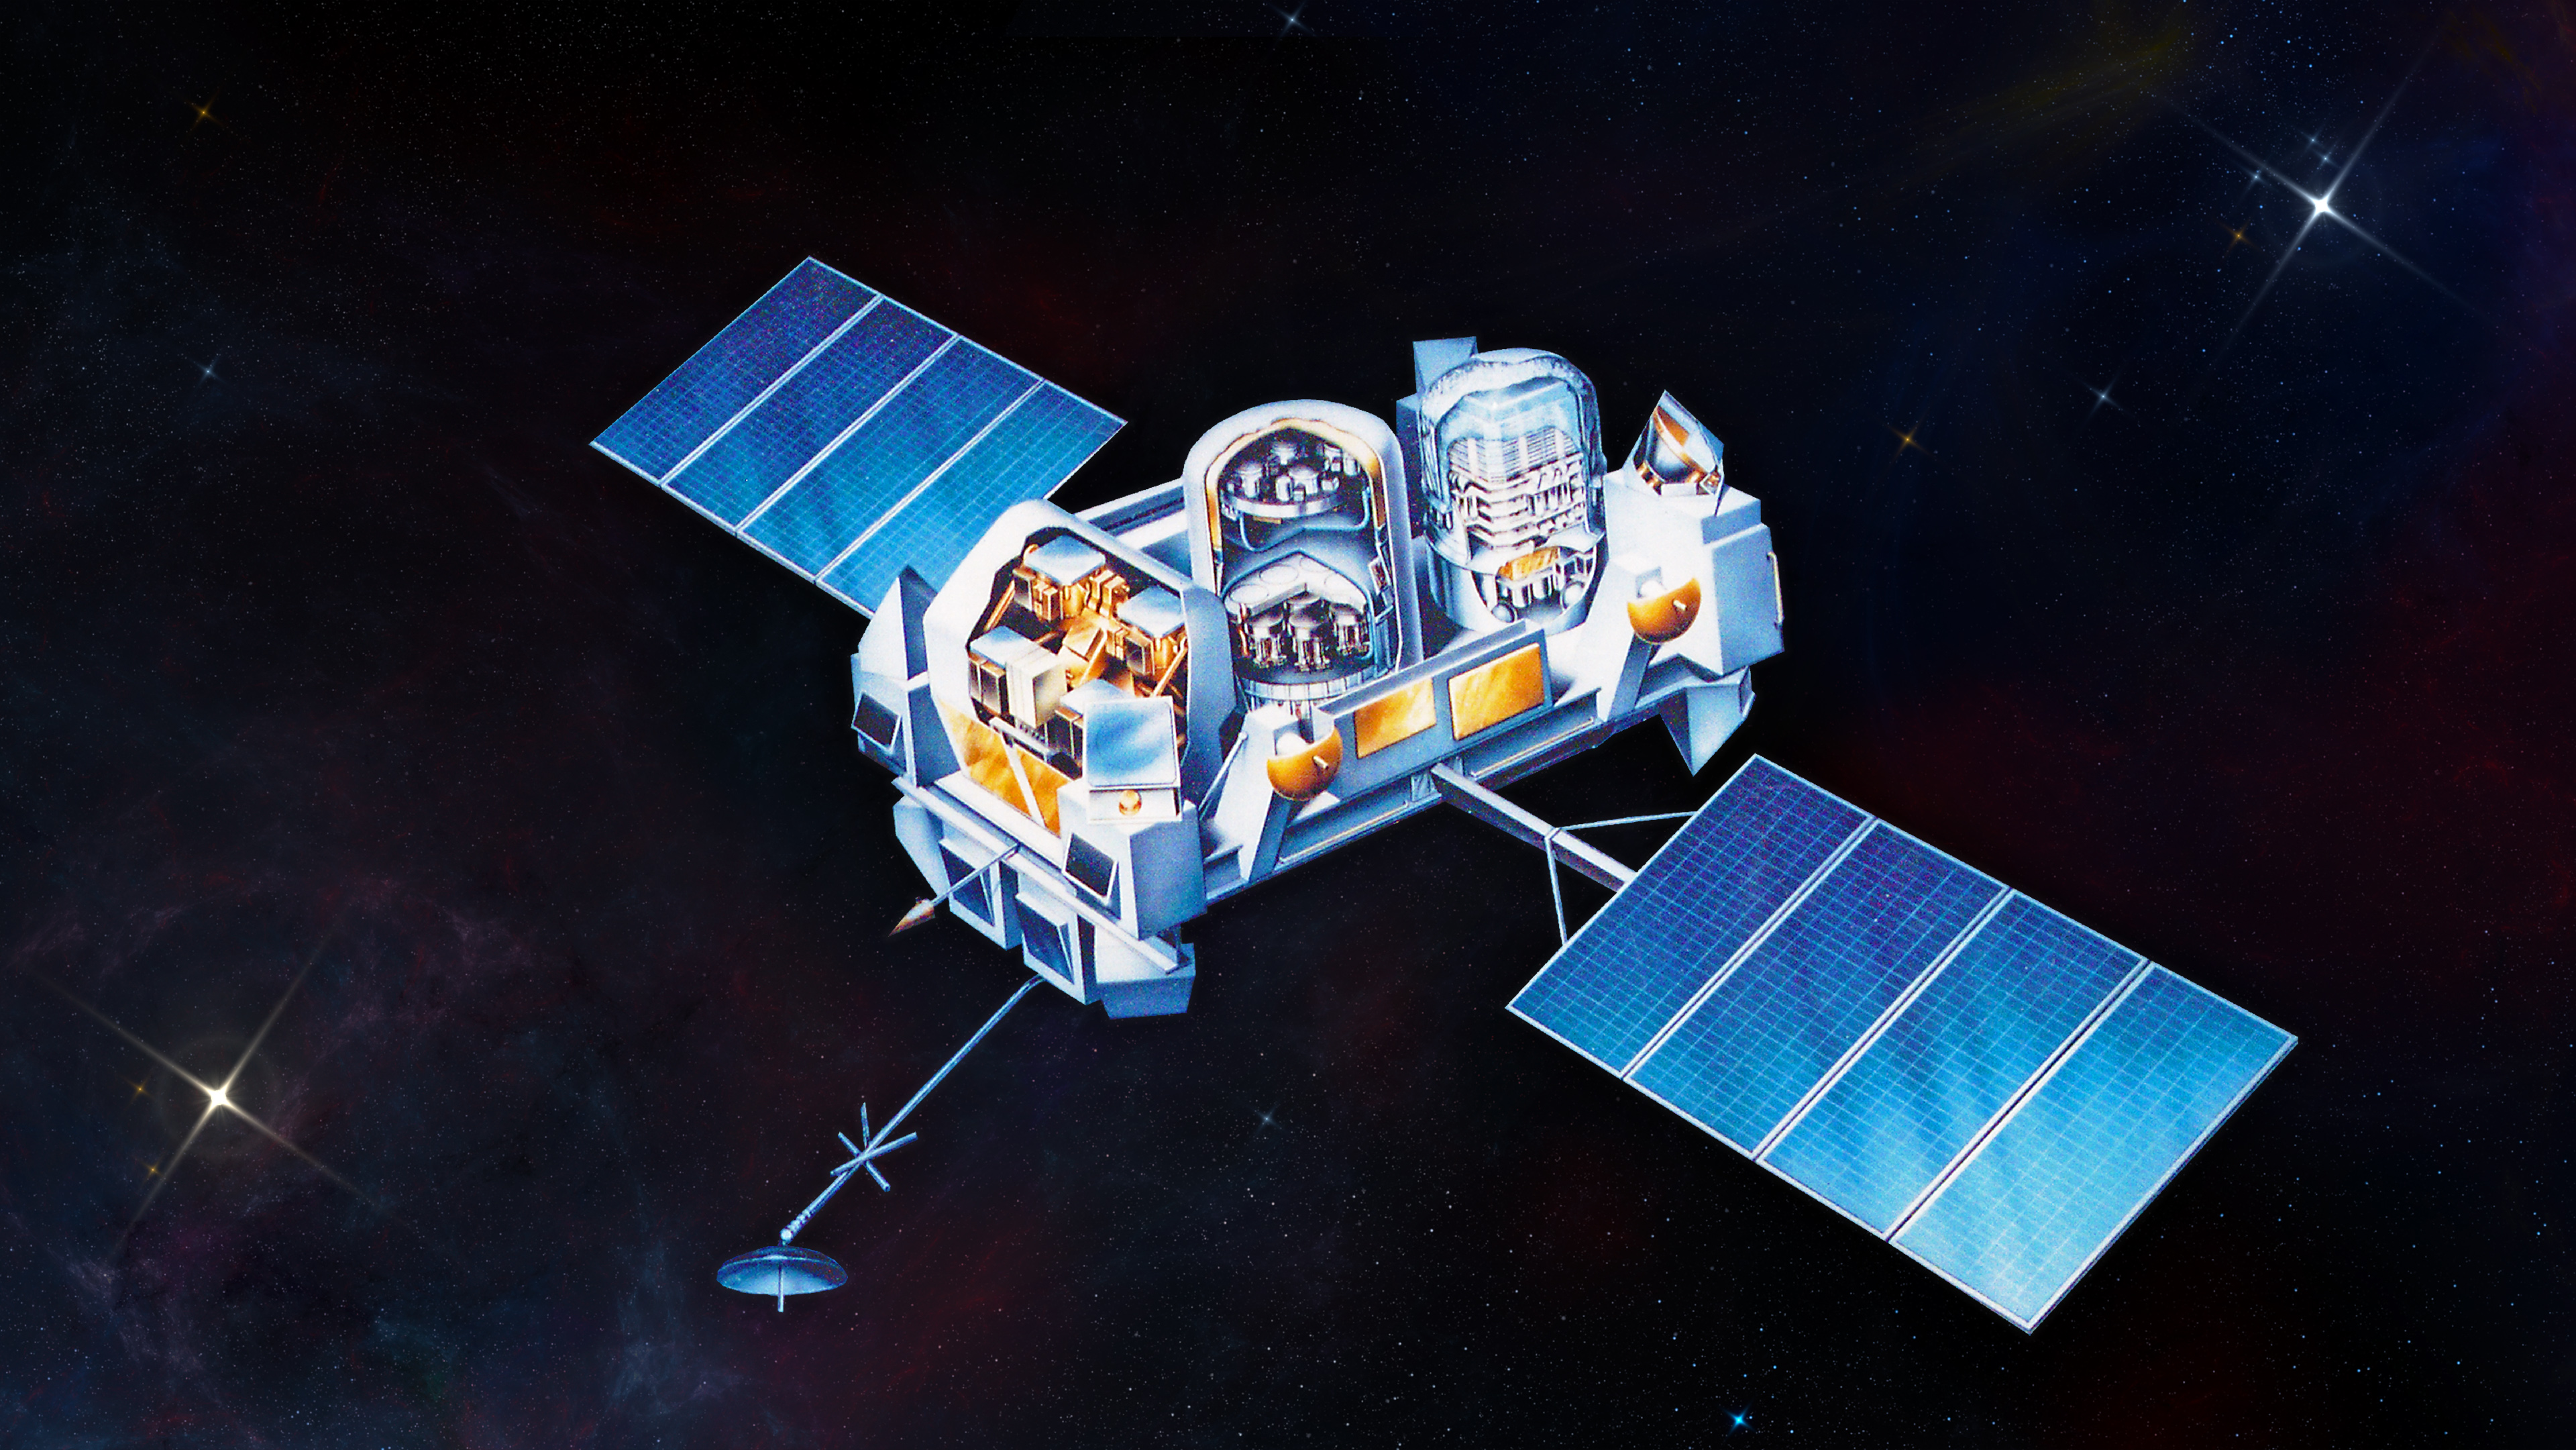 Artist concept of the CGRO satellite